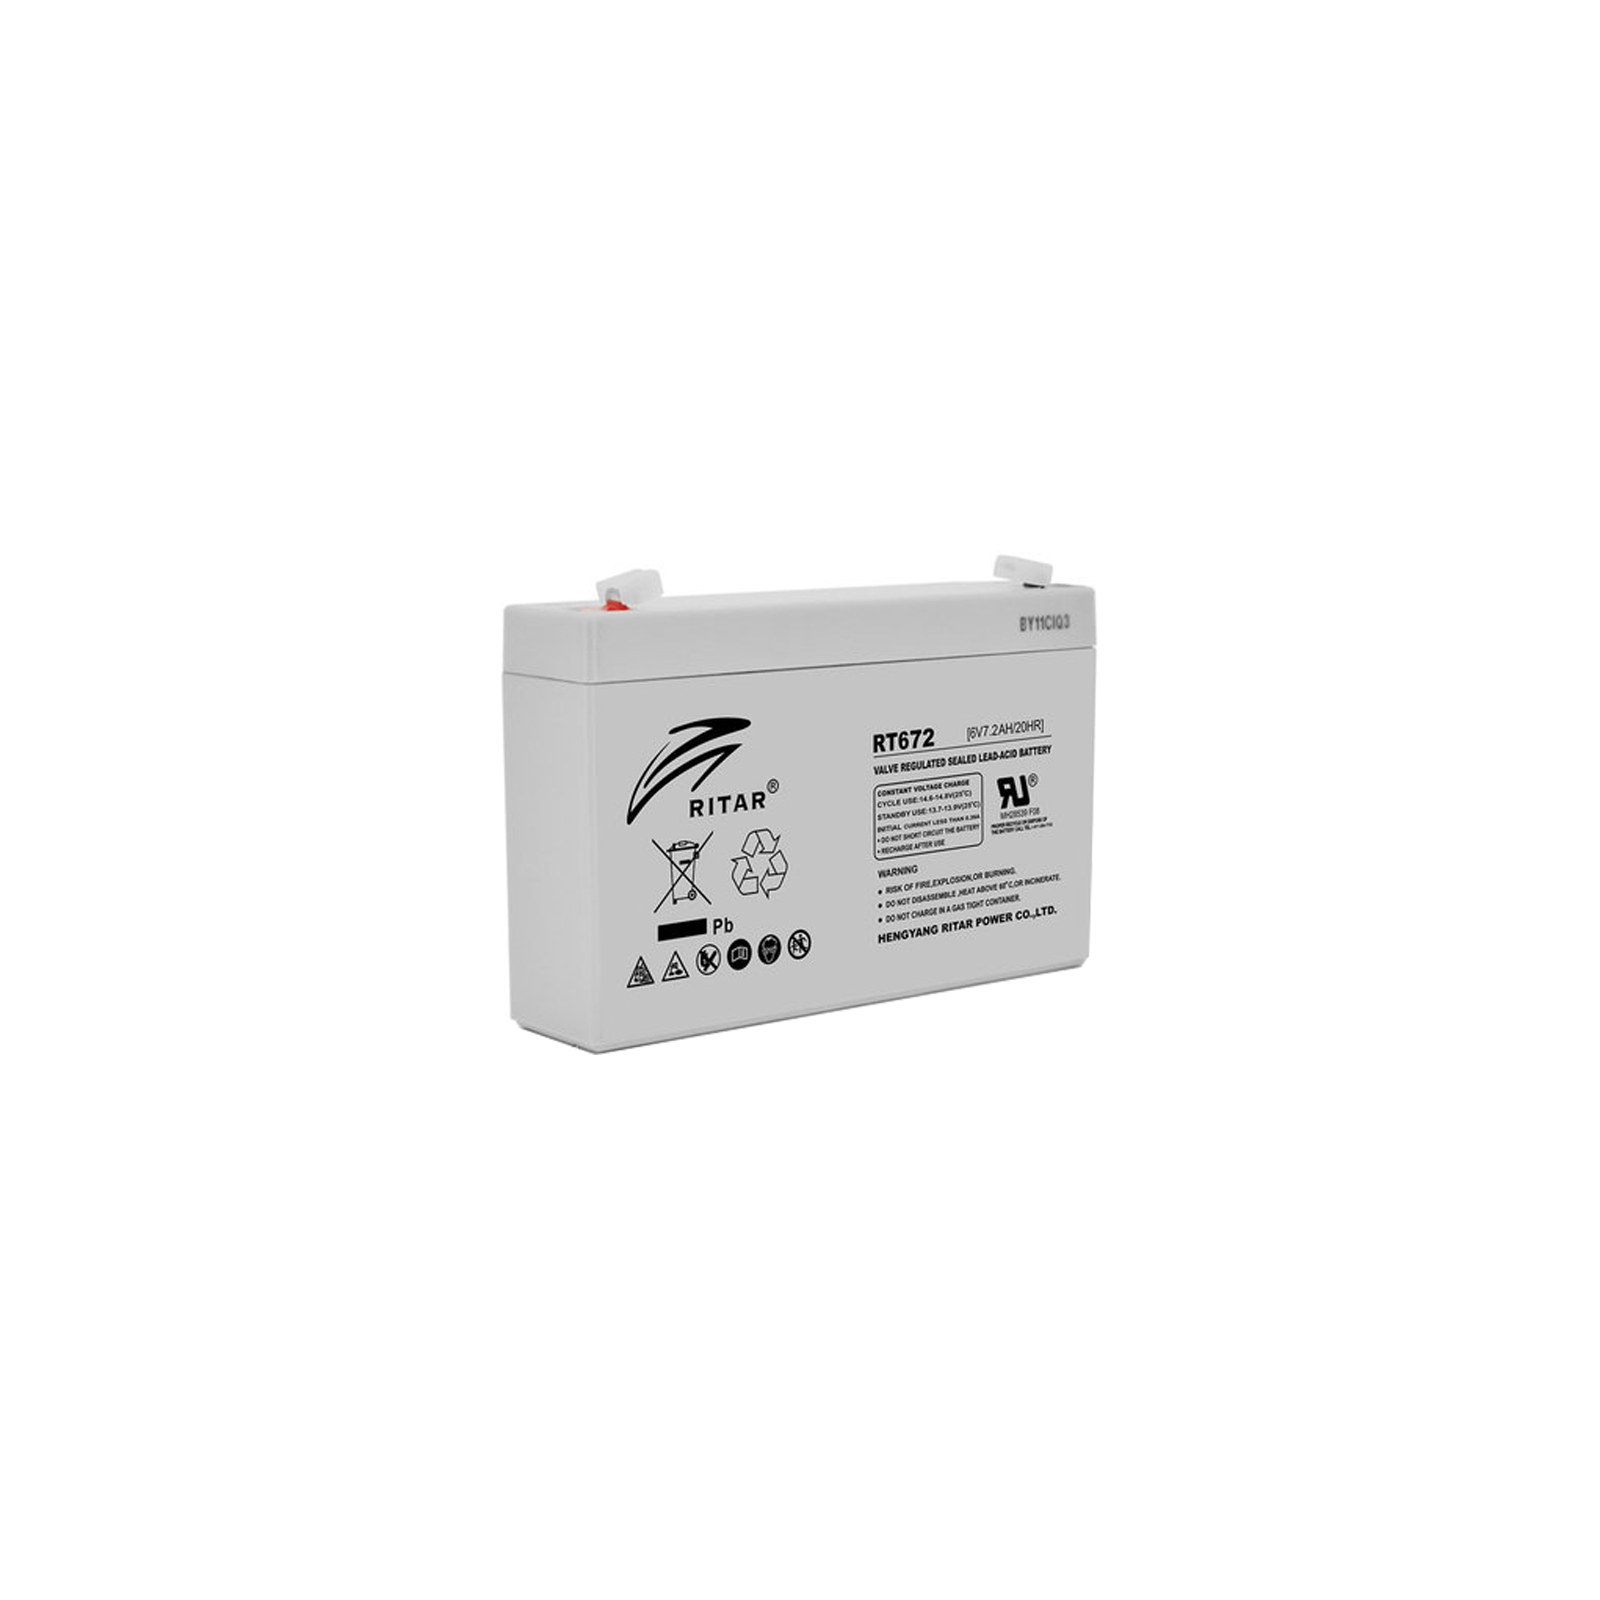 Батарея к ИБП Ritar AGM RT672, 6V-7.2Ah (RT672)